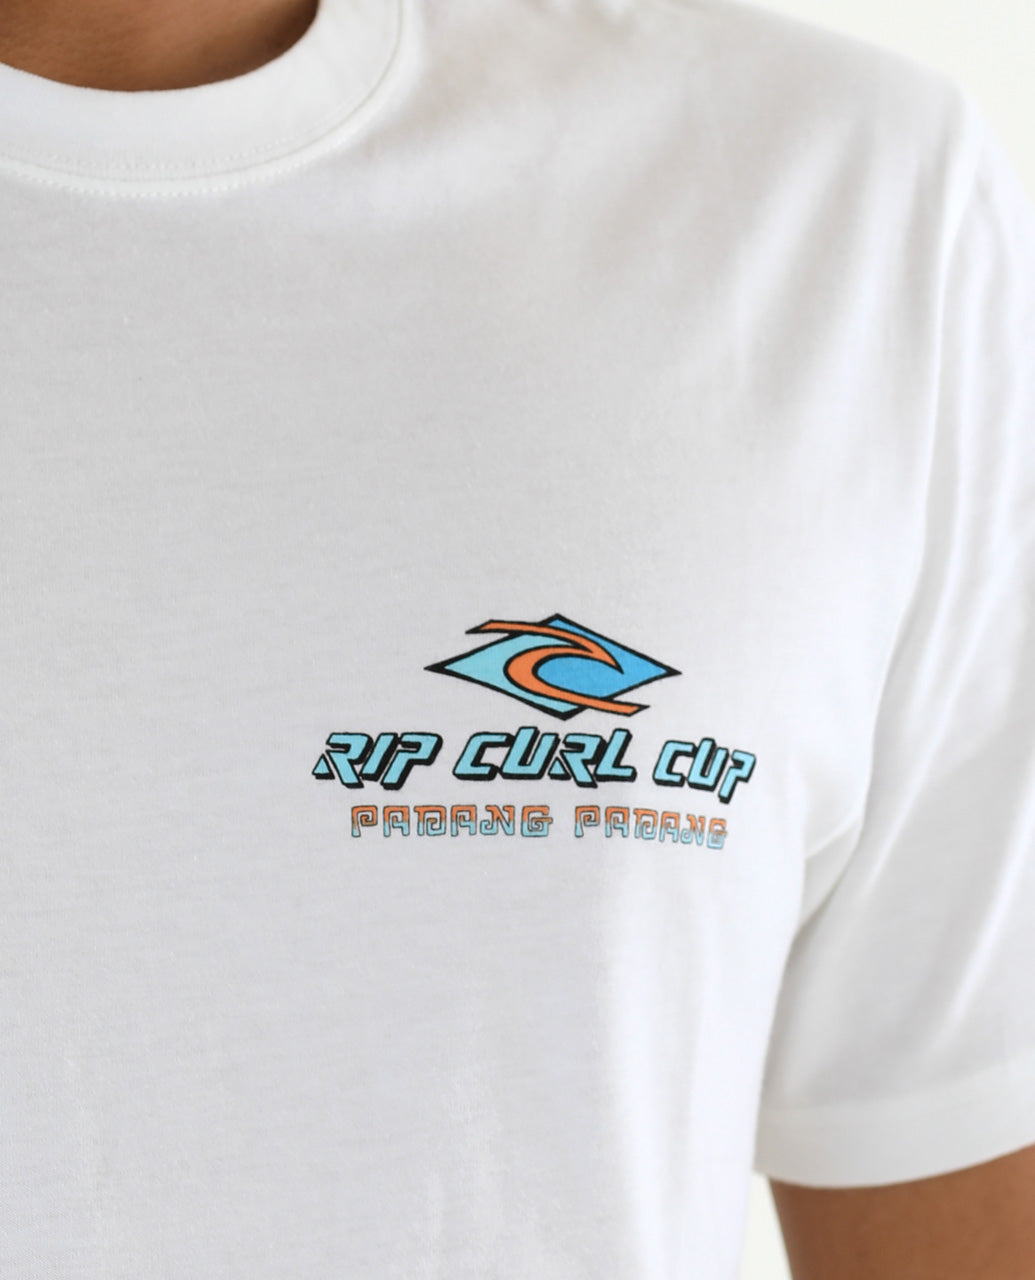 Rip Curl Cup Padang Padang, Events